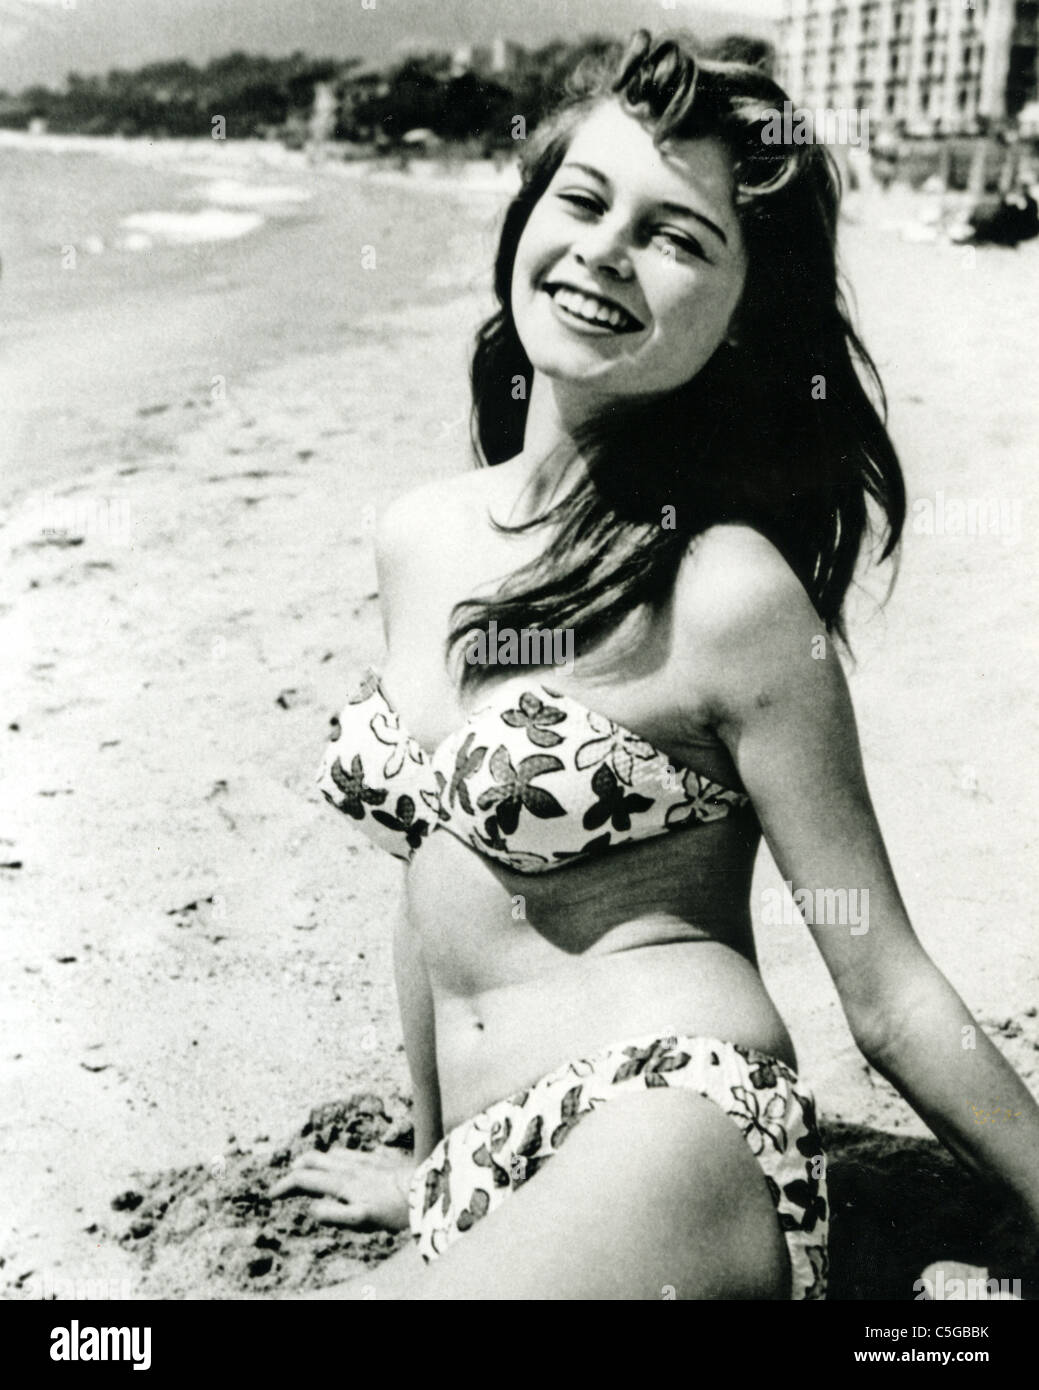 Brigitte bardot bikini hi-res stock photography and images - Alamy